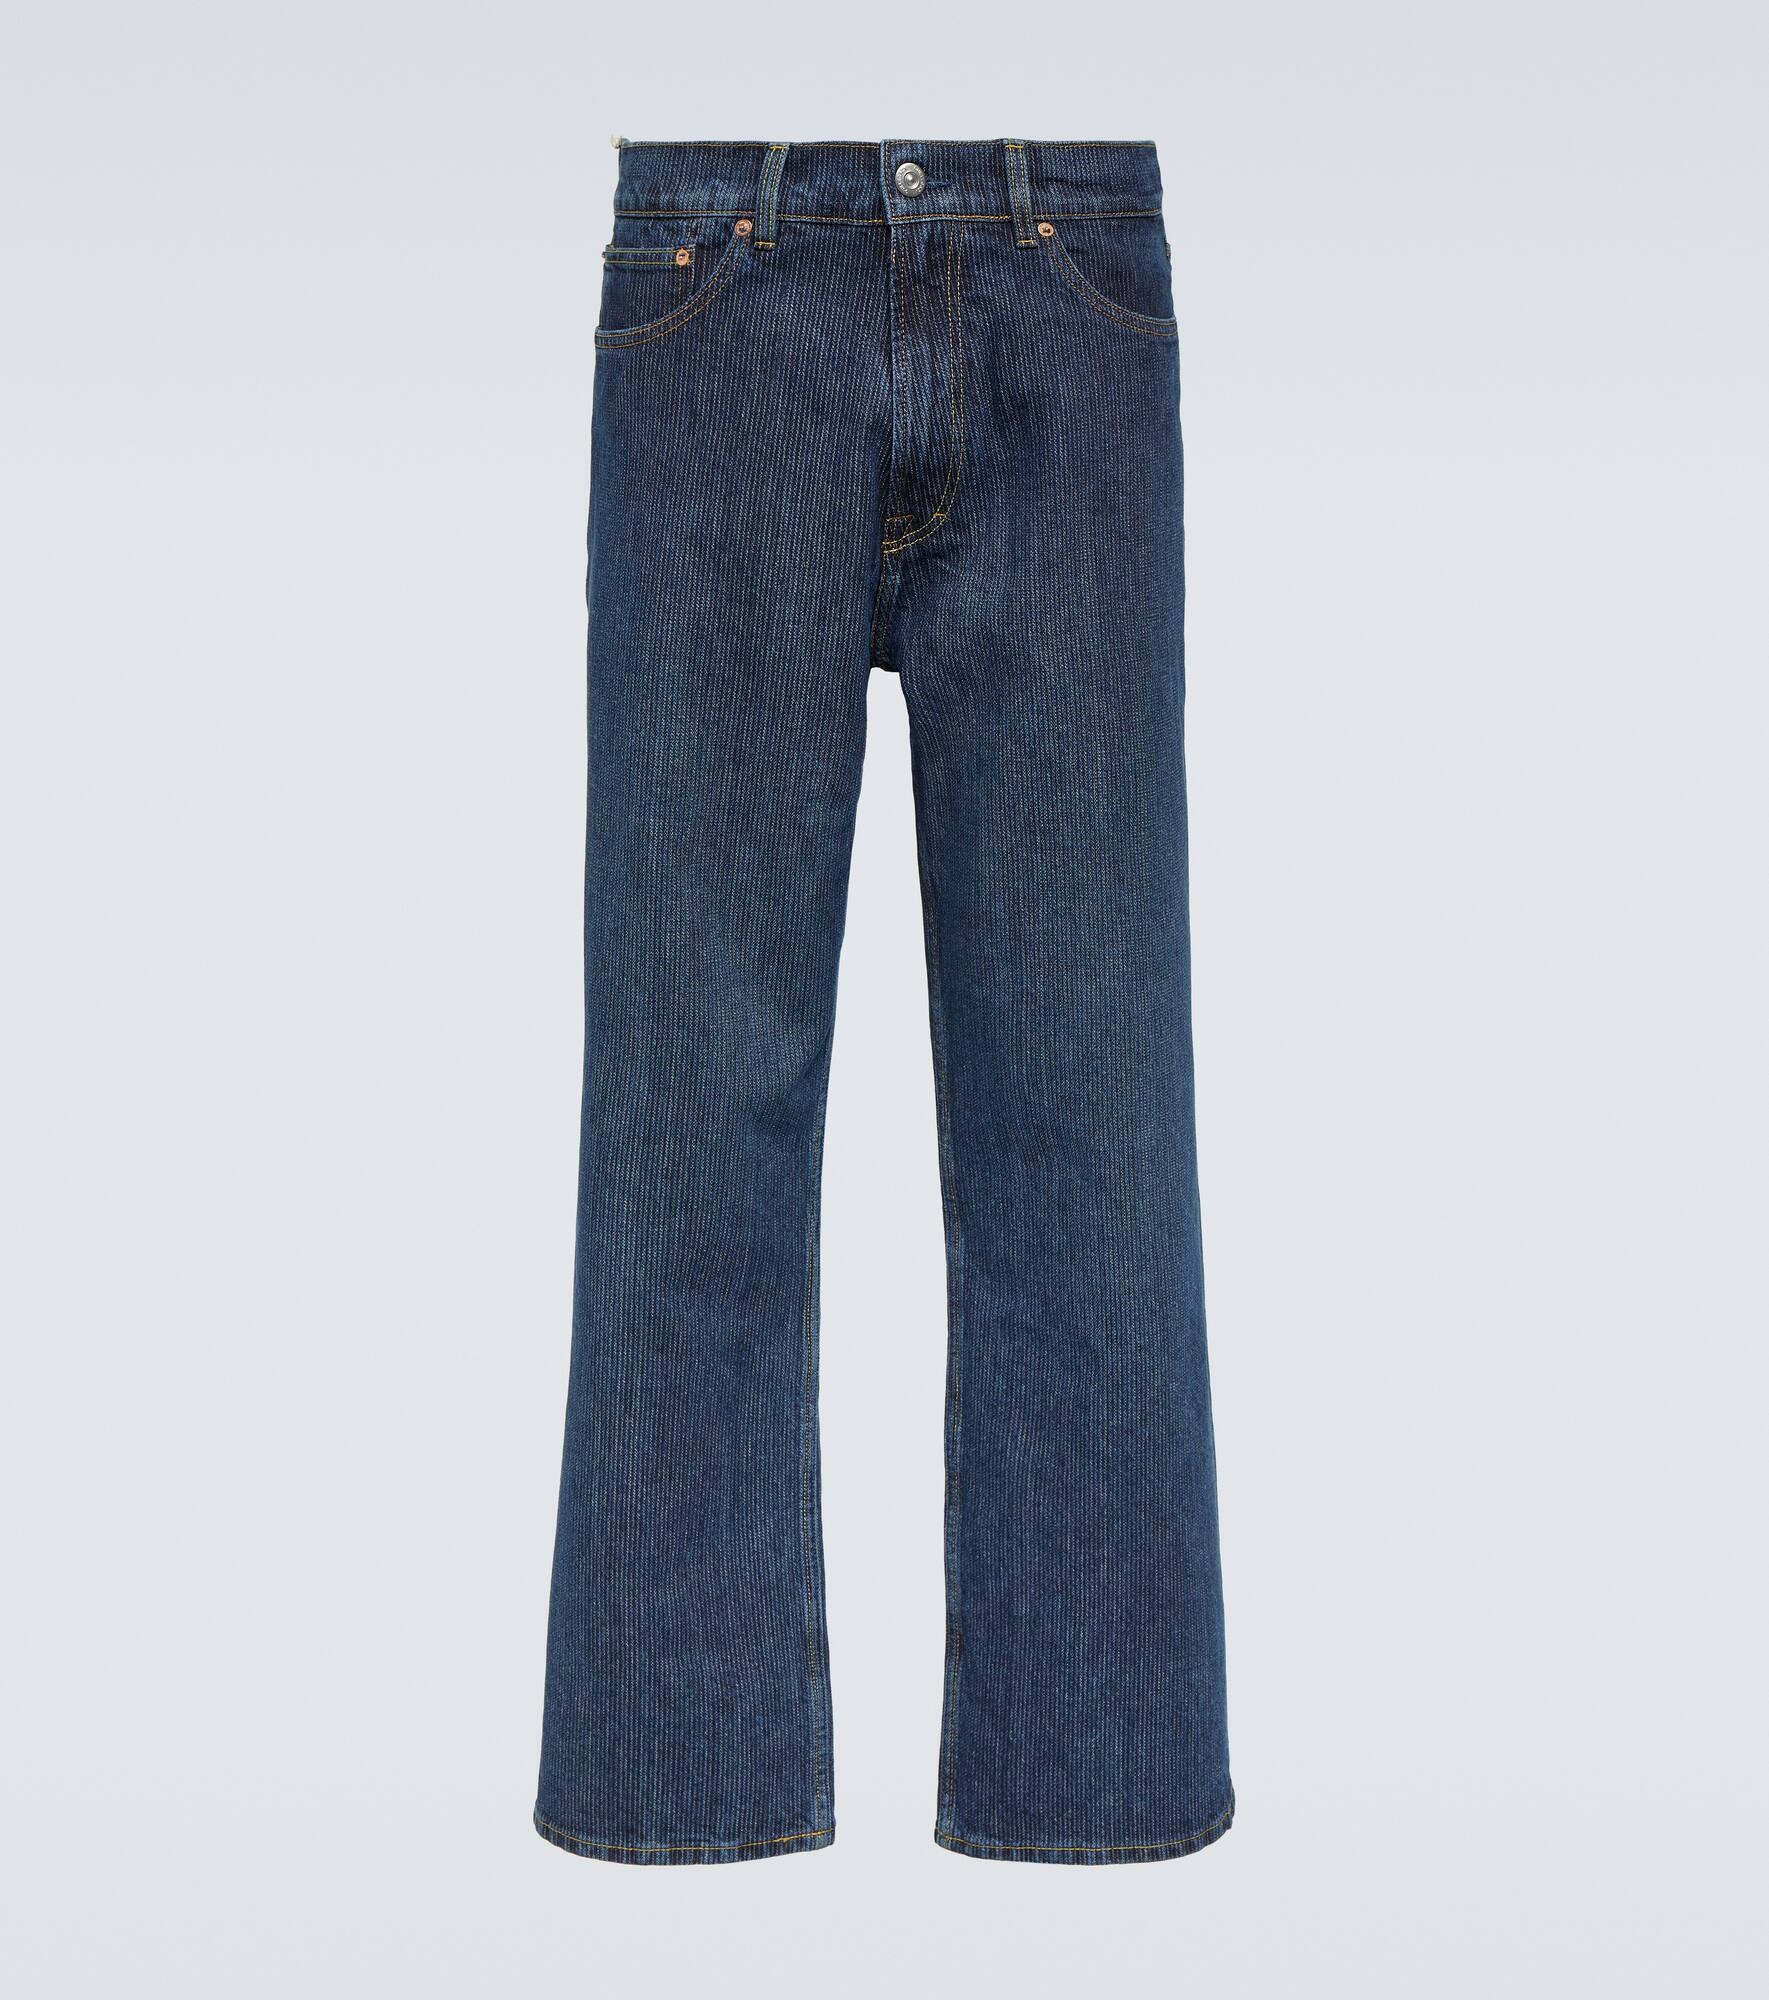 Third Cut straight jeans - 1